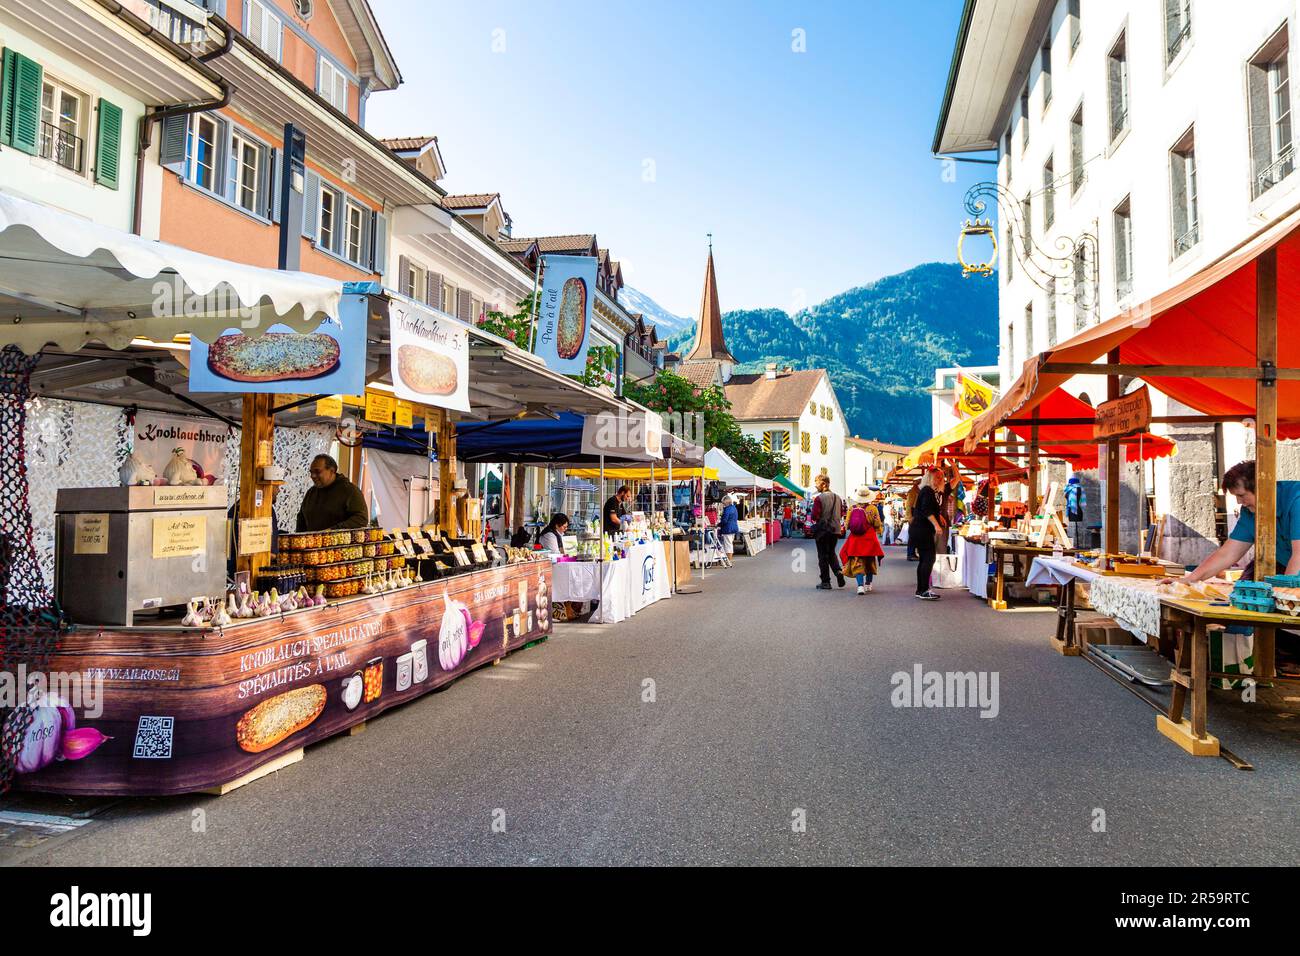 Samstags Bauernmarkt in Unterseen, Schweiz Stockfoto